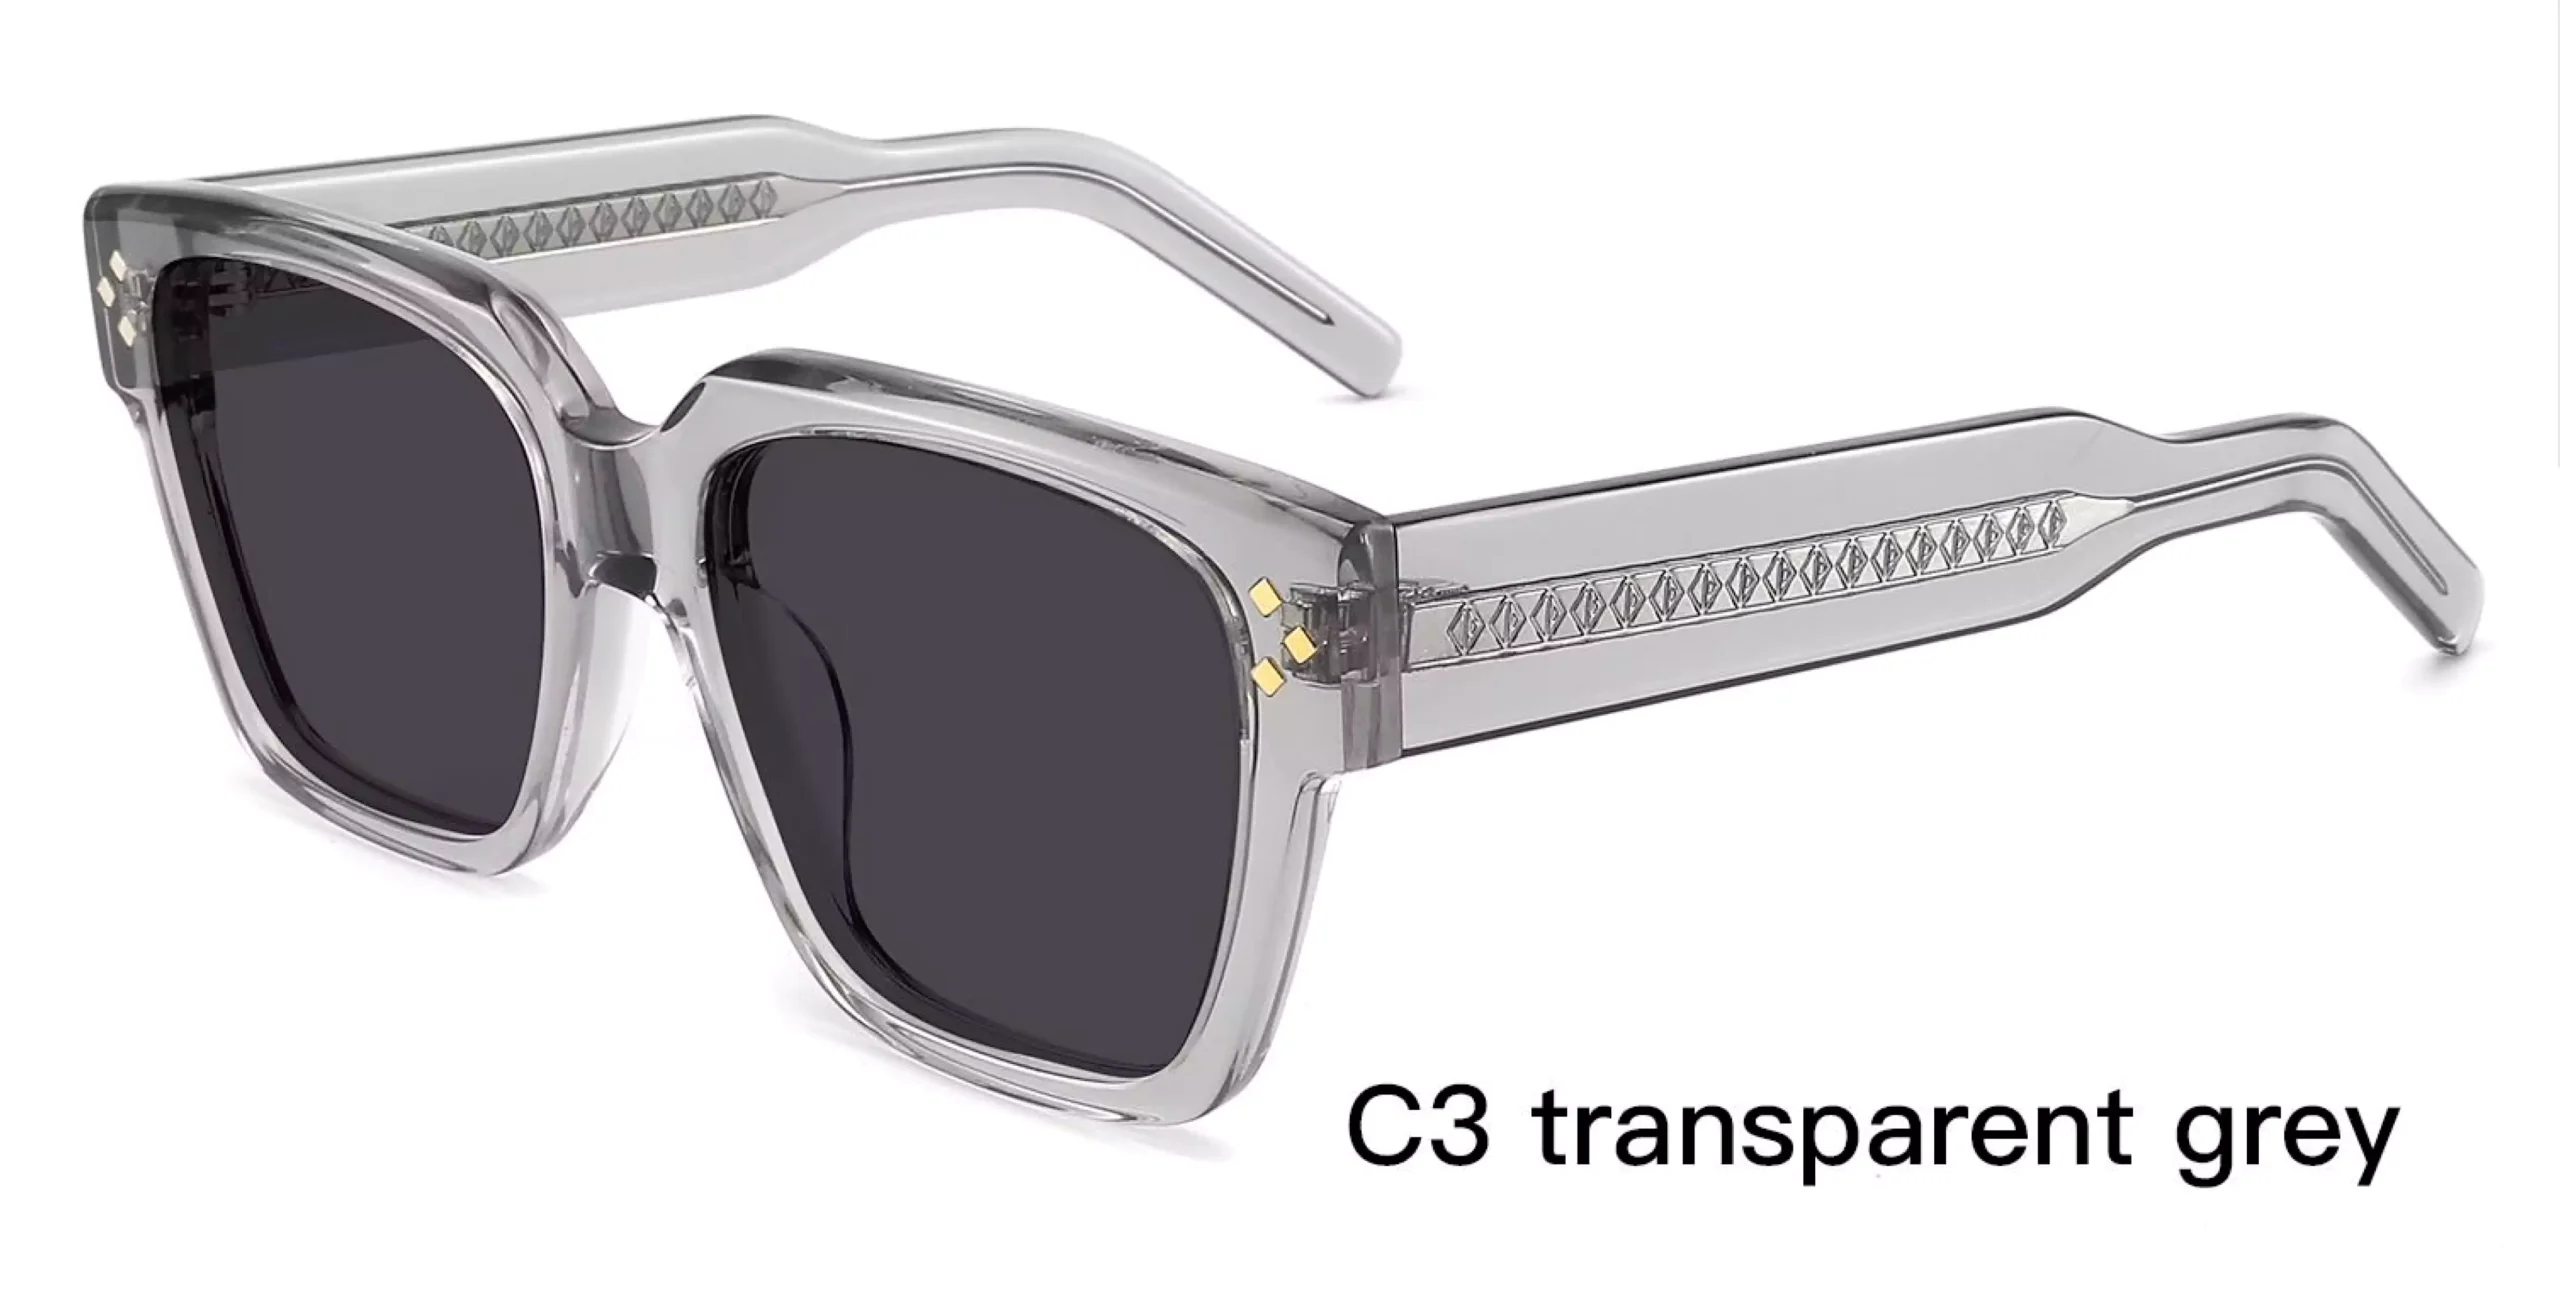 Wholesale Sunglasses Suppliers, Transparent Grey, rivets, laser engraved wire cores, acetate sunglasses,square sunglasses,UV protection sunglasses